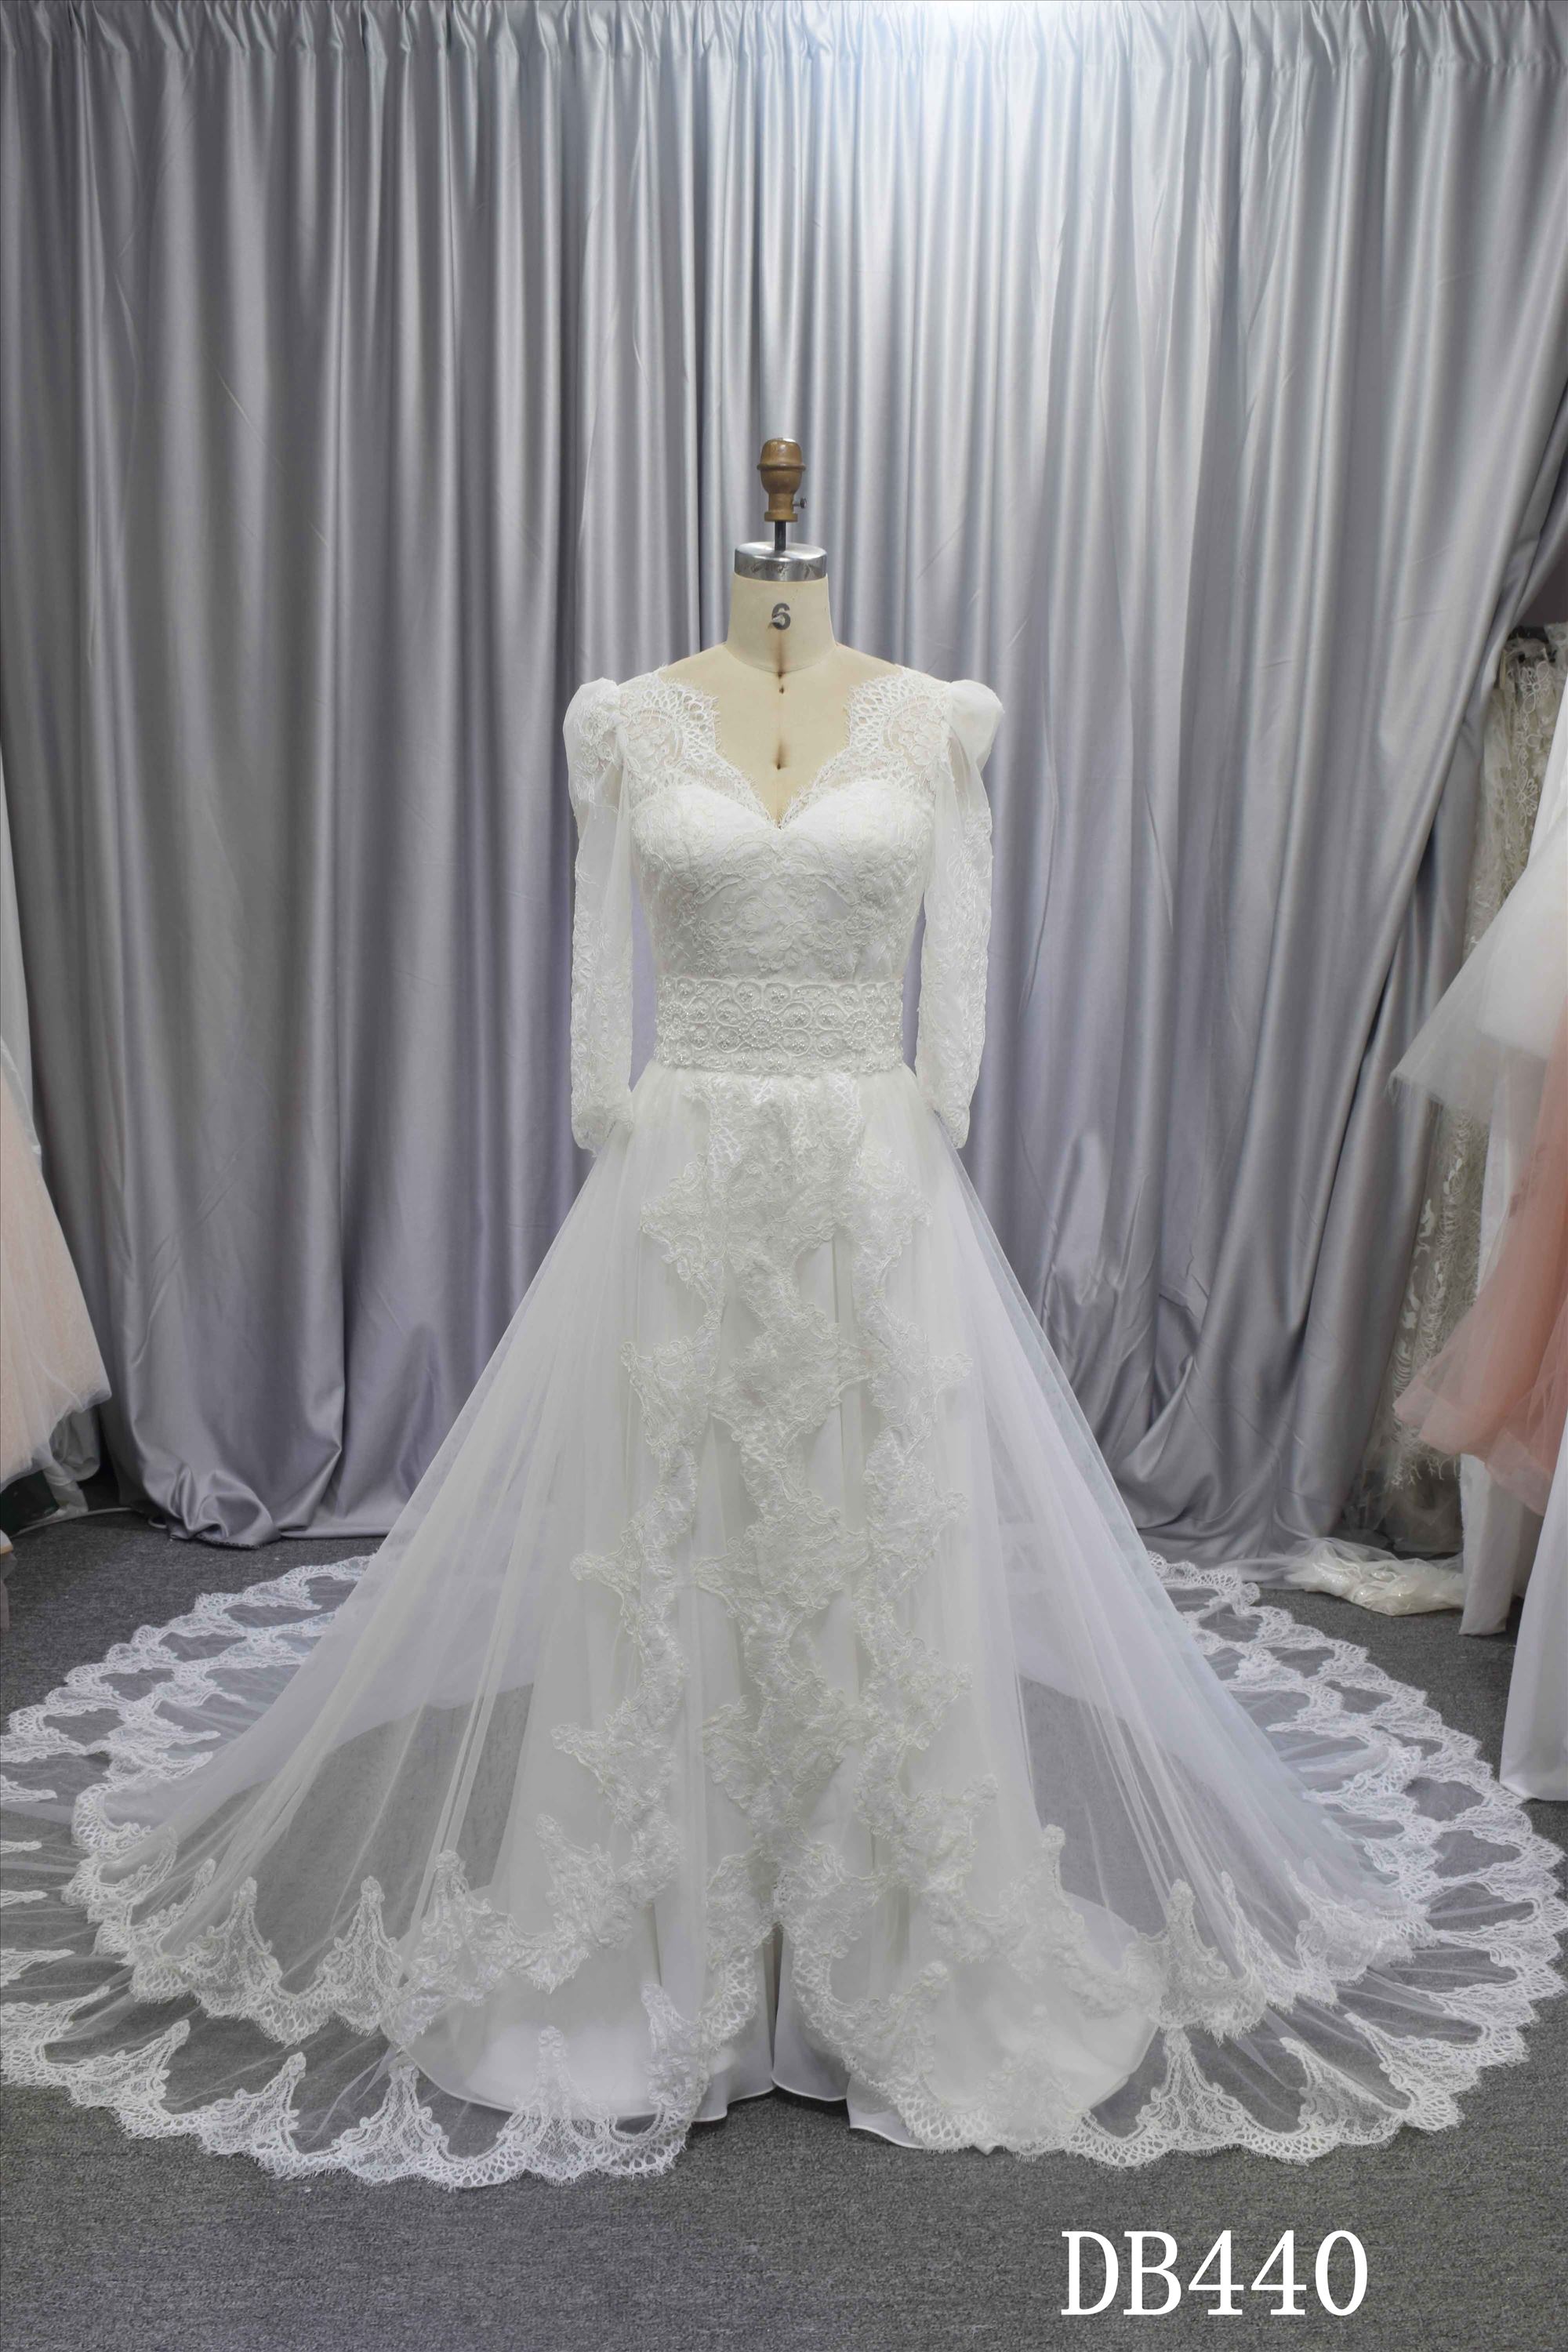 Princess A line bridal dress with a detachable lace skirt